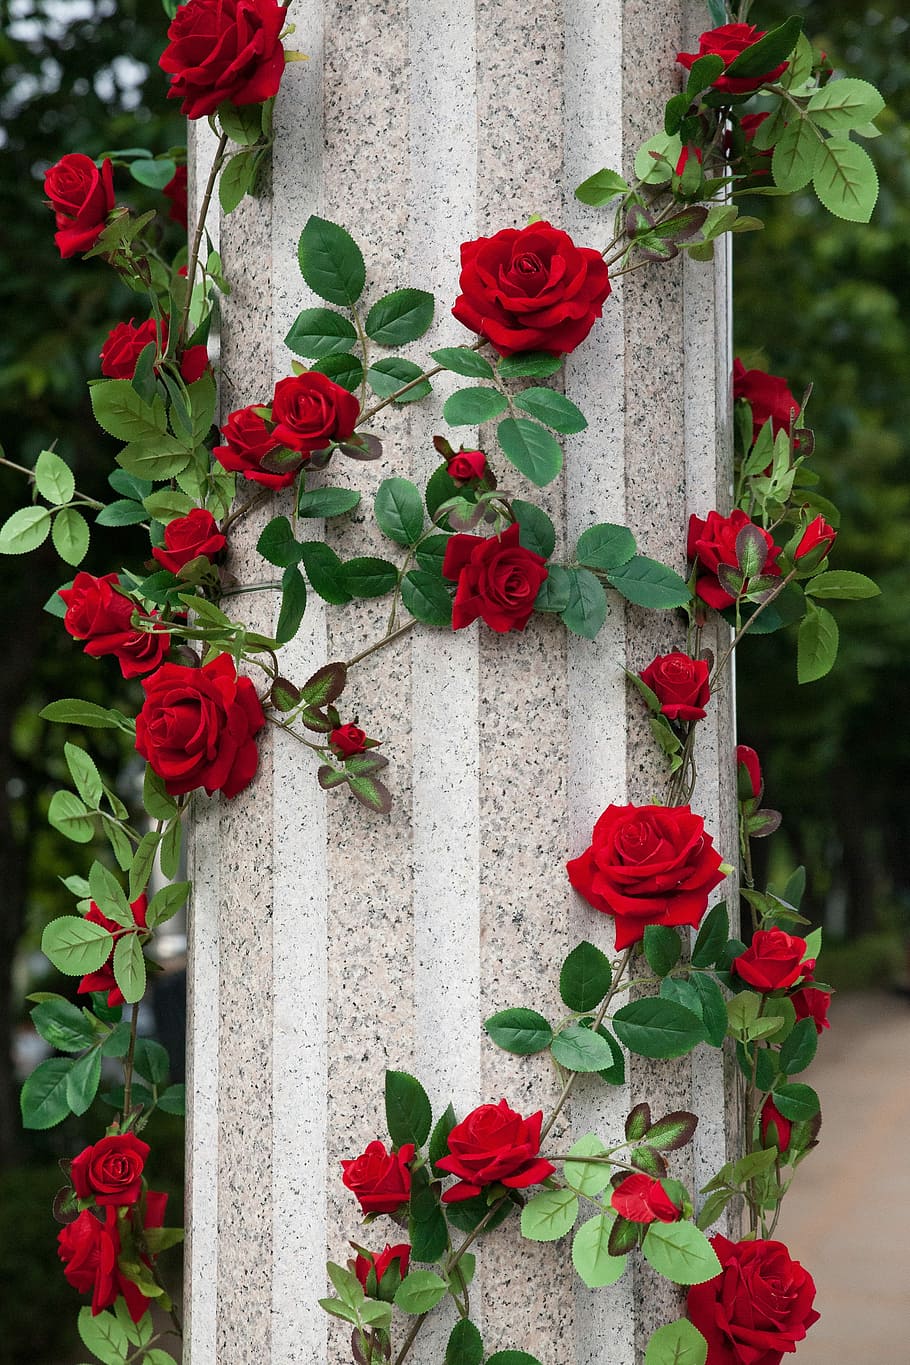 red roses around white concrete pillar, flowers, rose garden